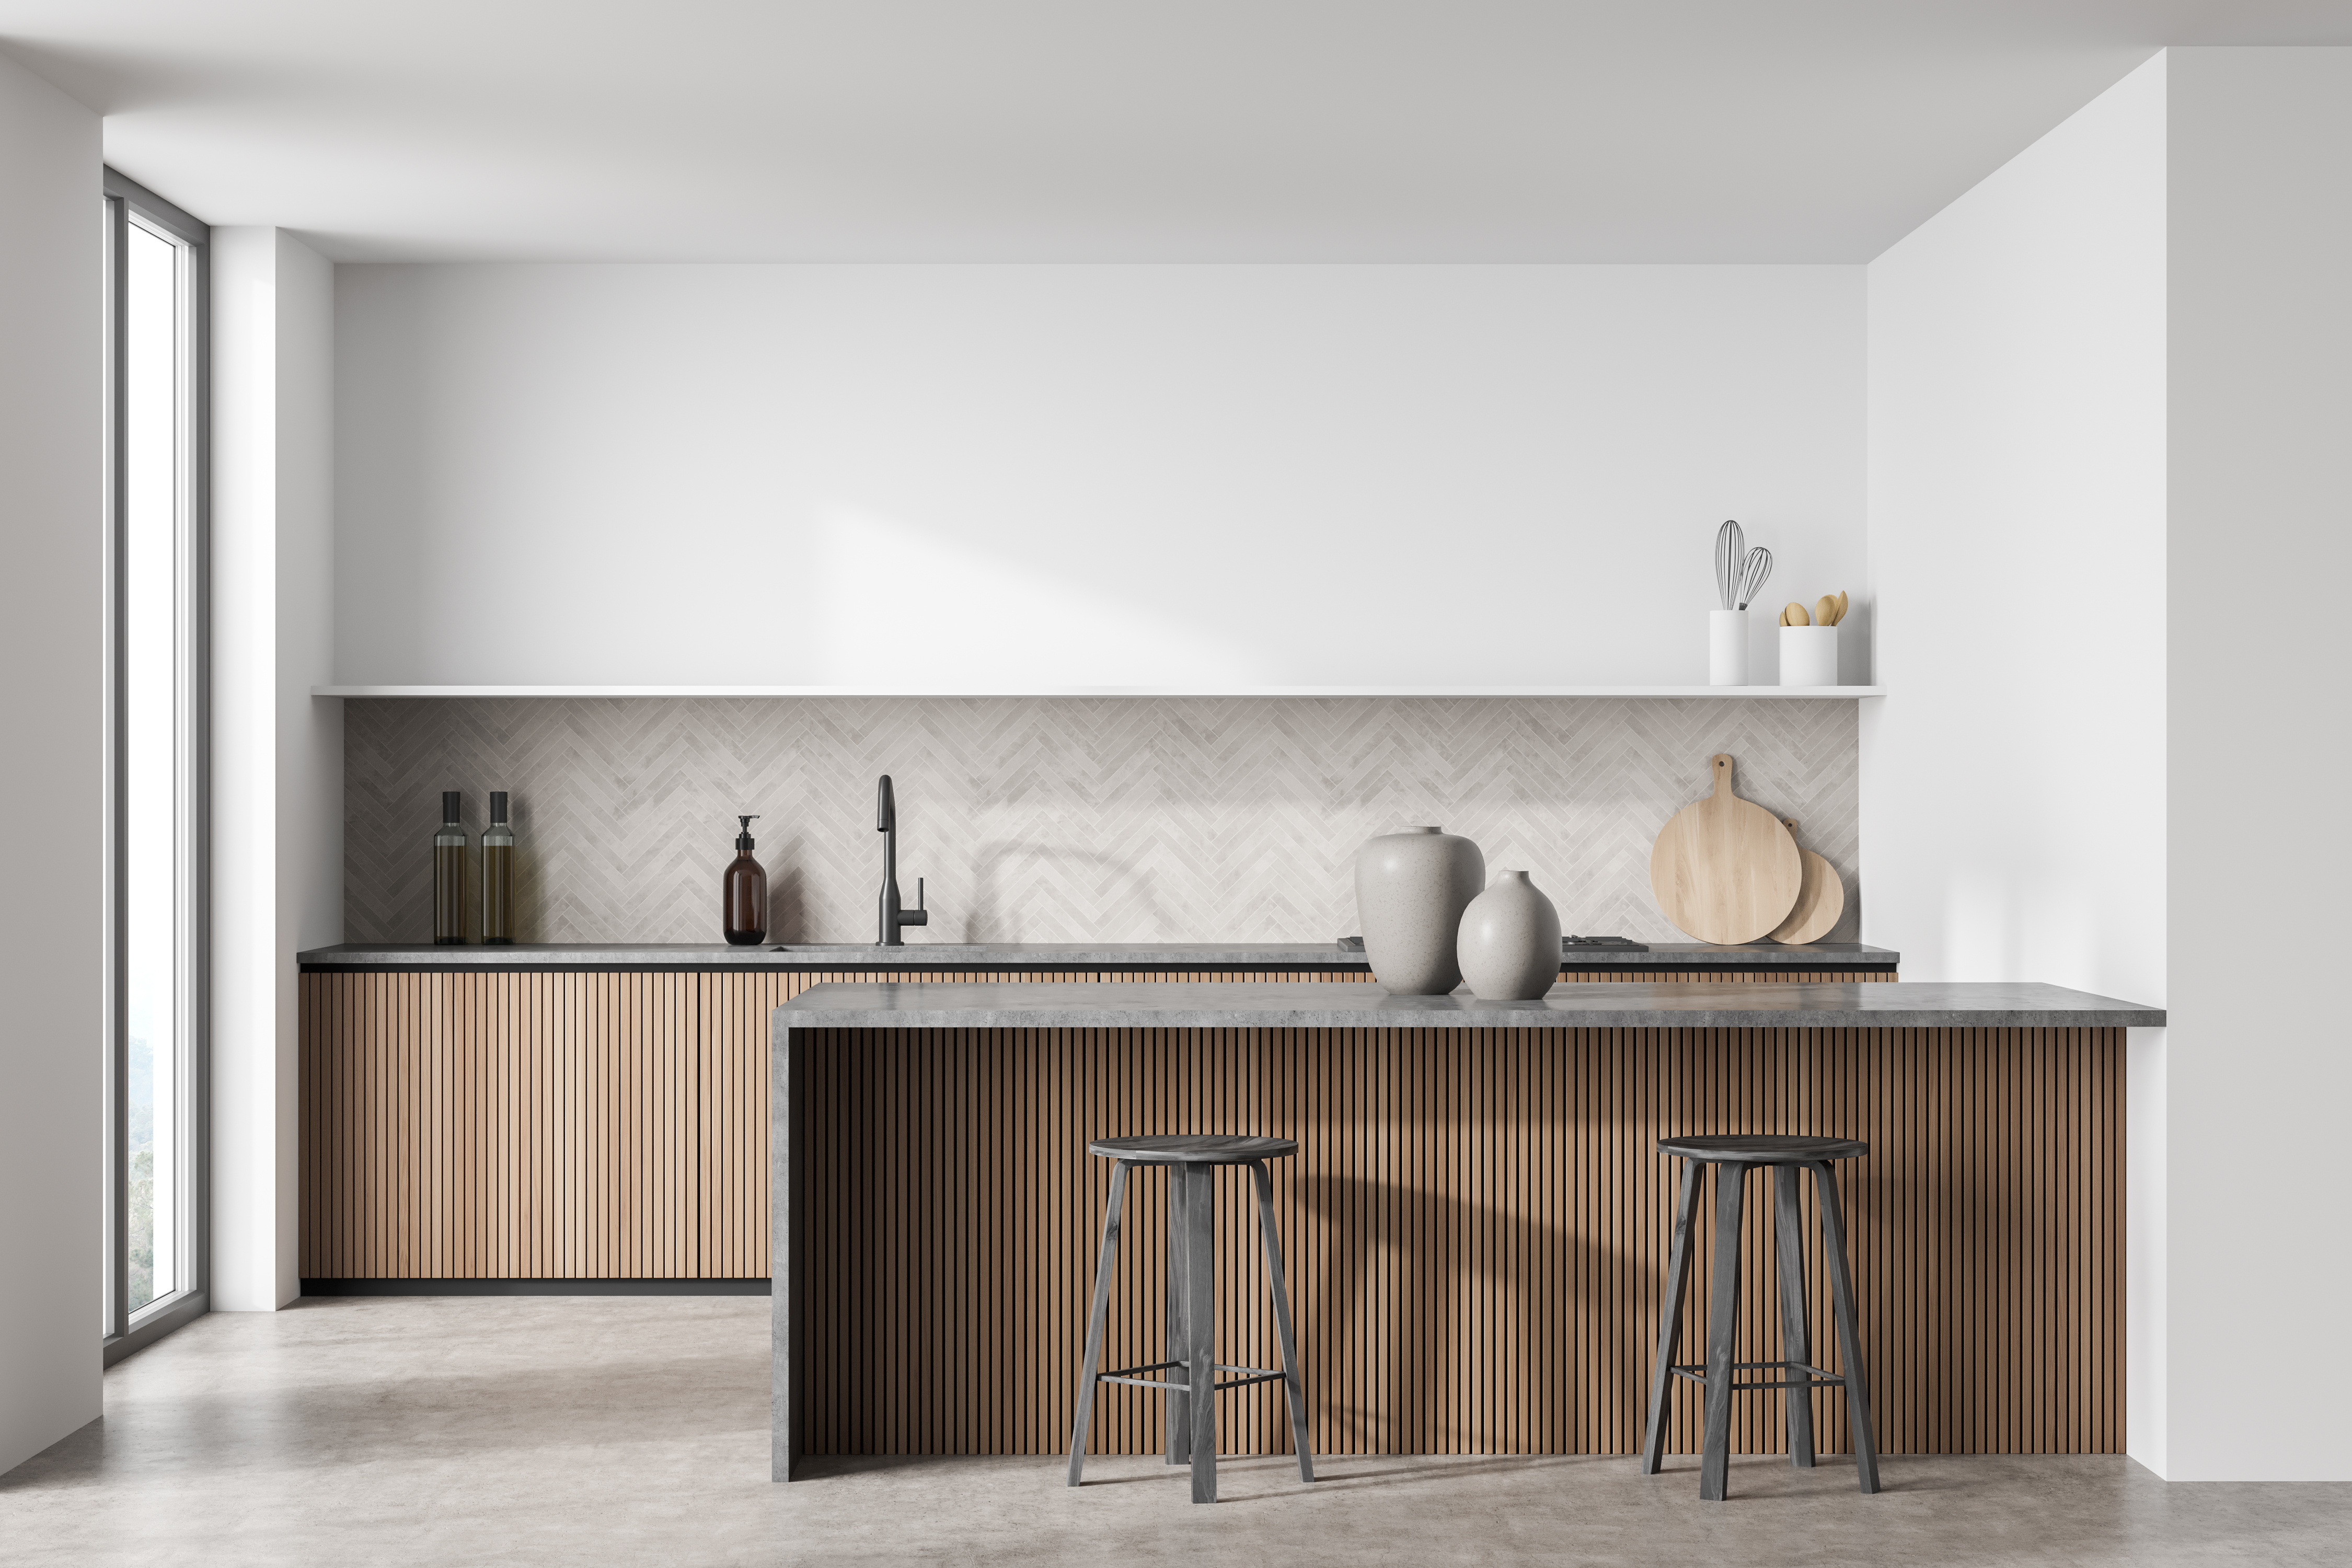 Breakfast bar and minimalist white and wood kitchen